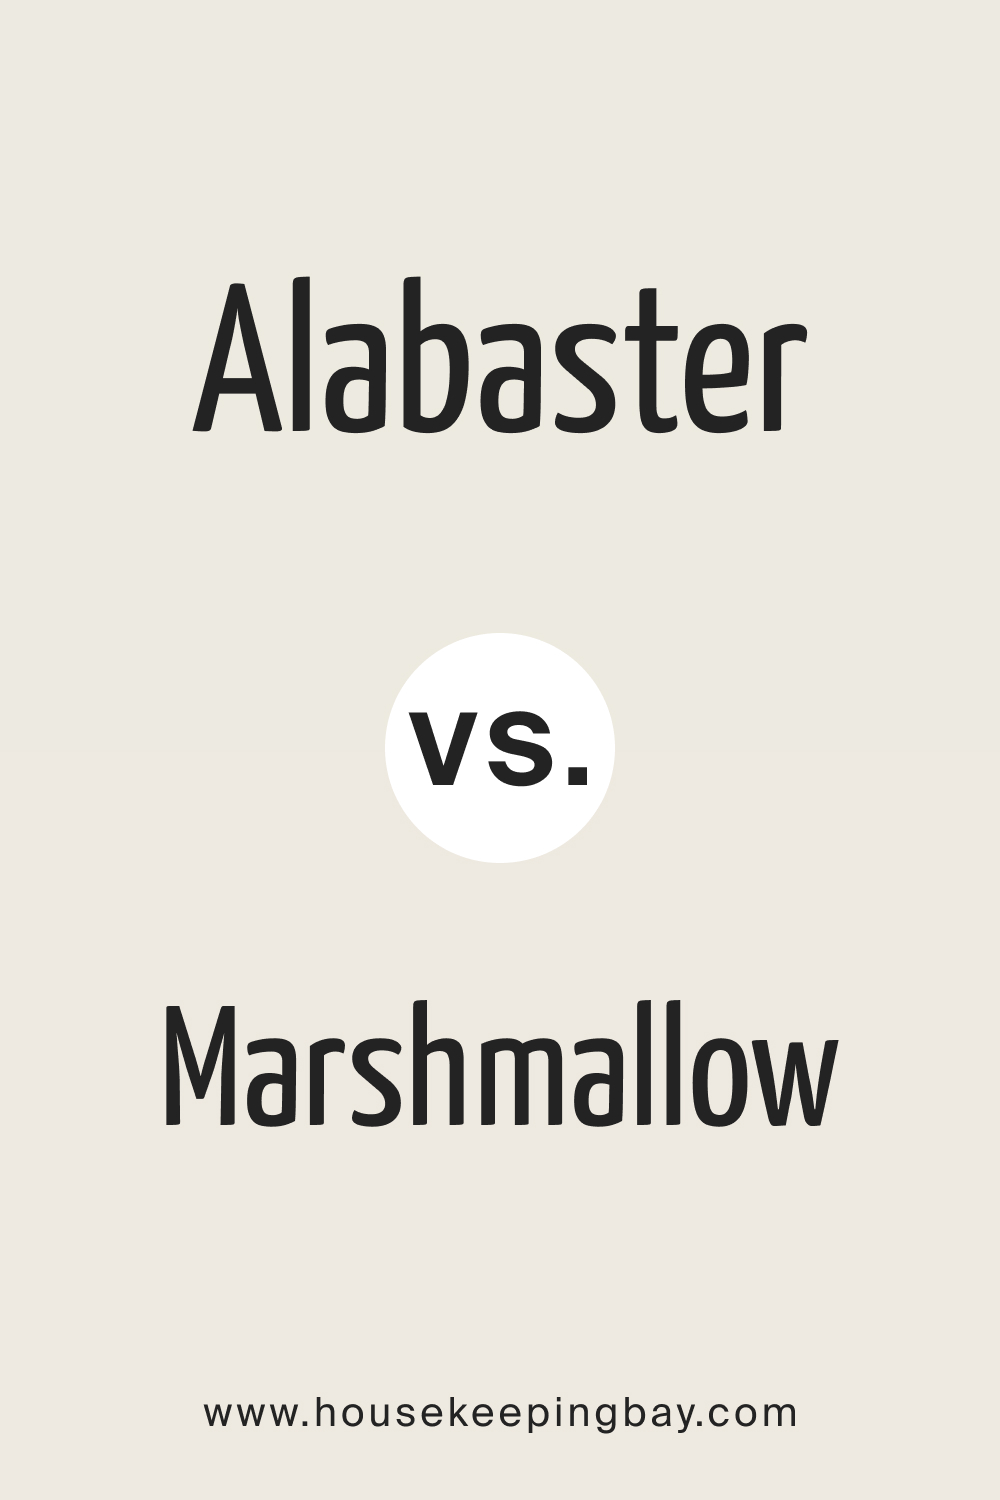 Alabaster vs. Marshmallow